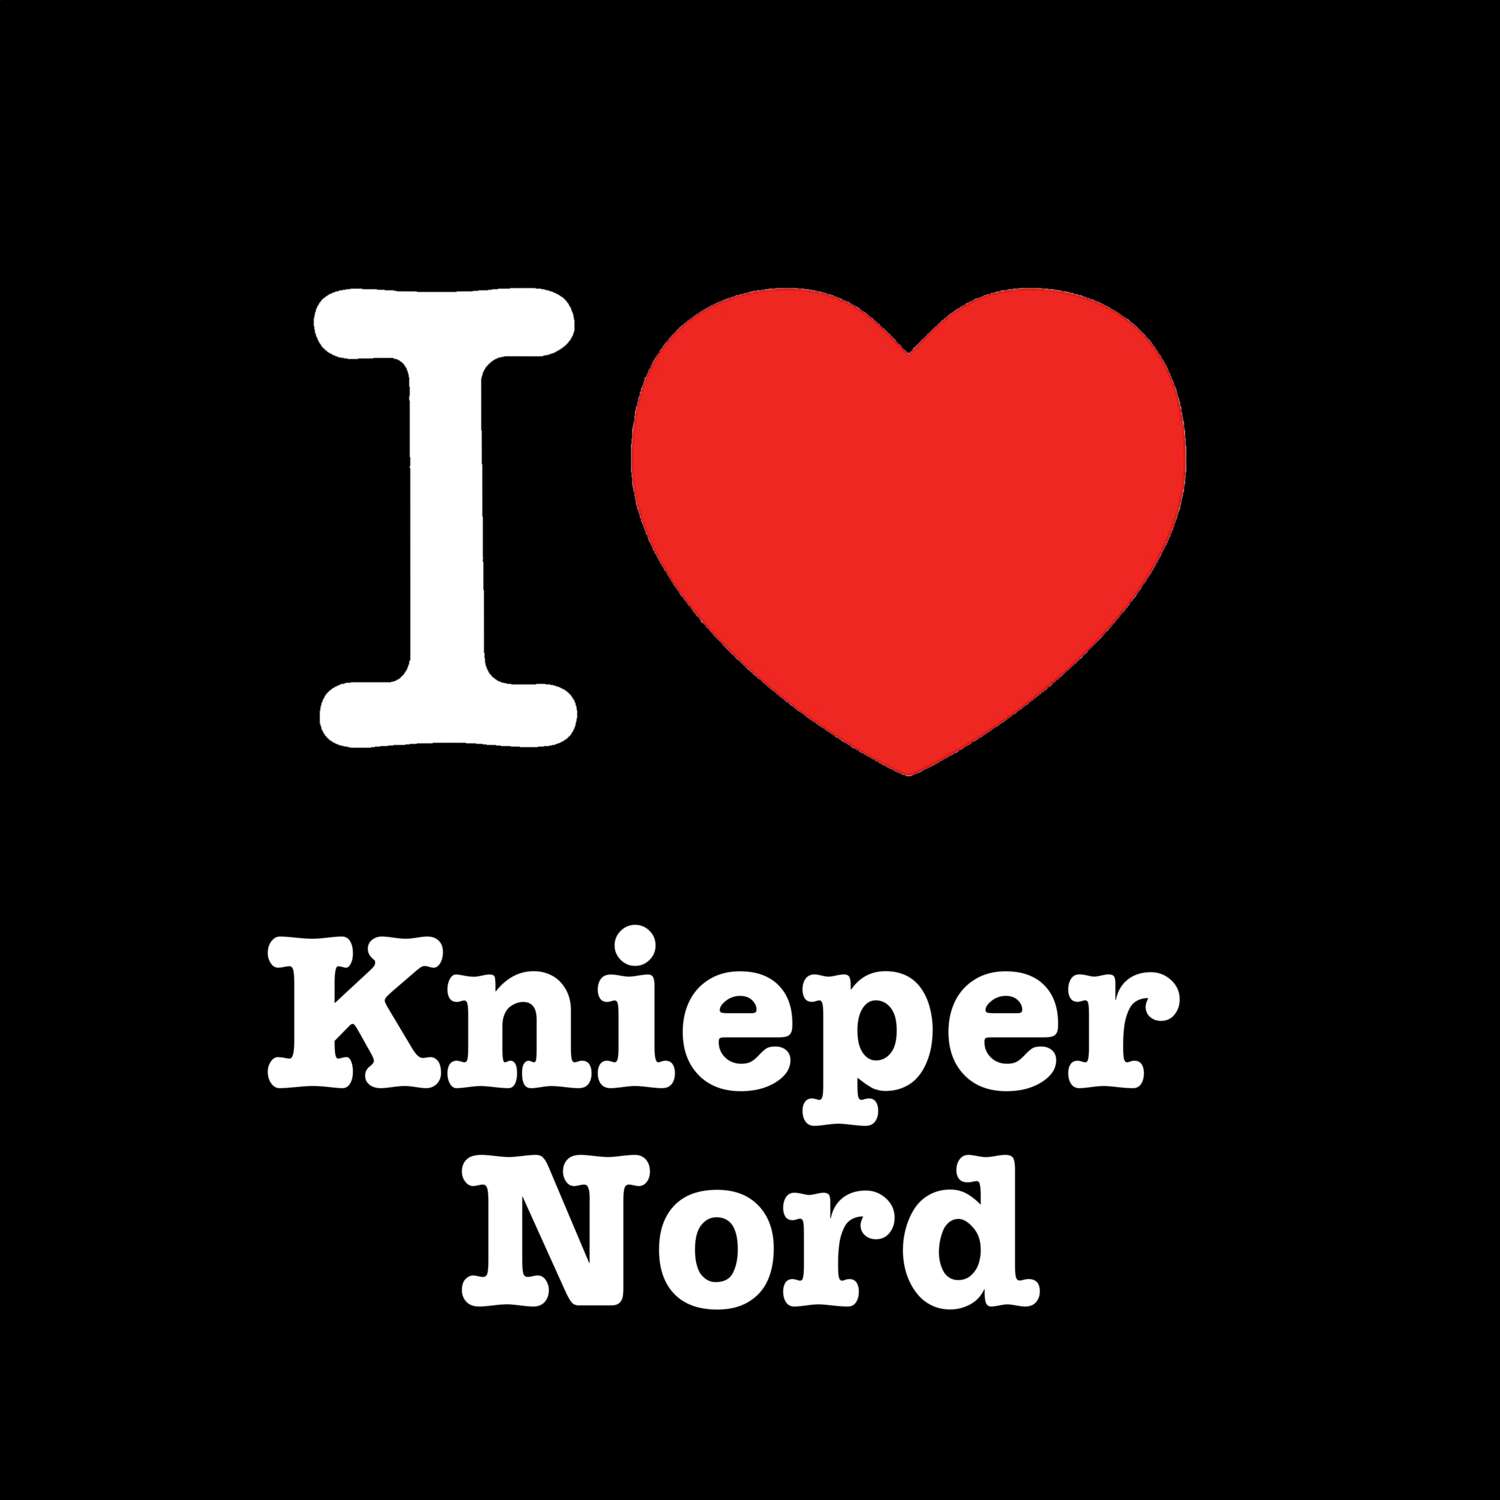 Knieper Nord T-Shirt »I love«